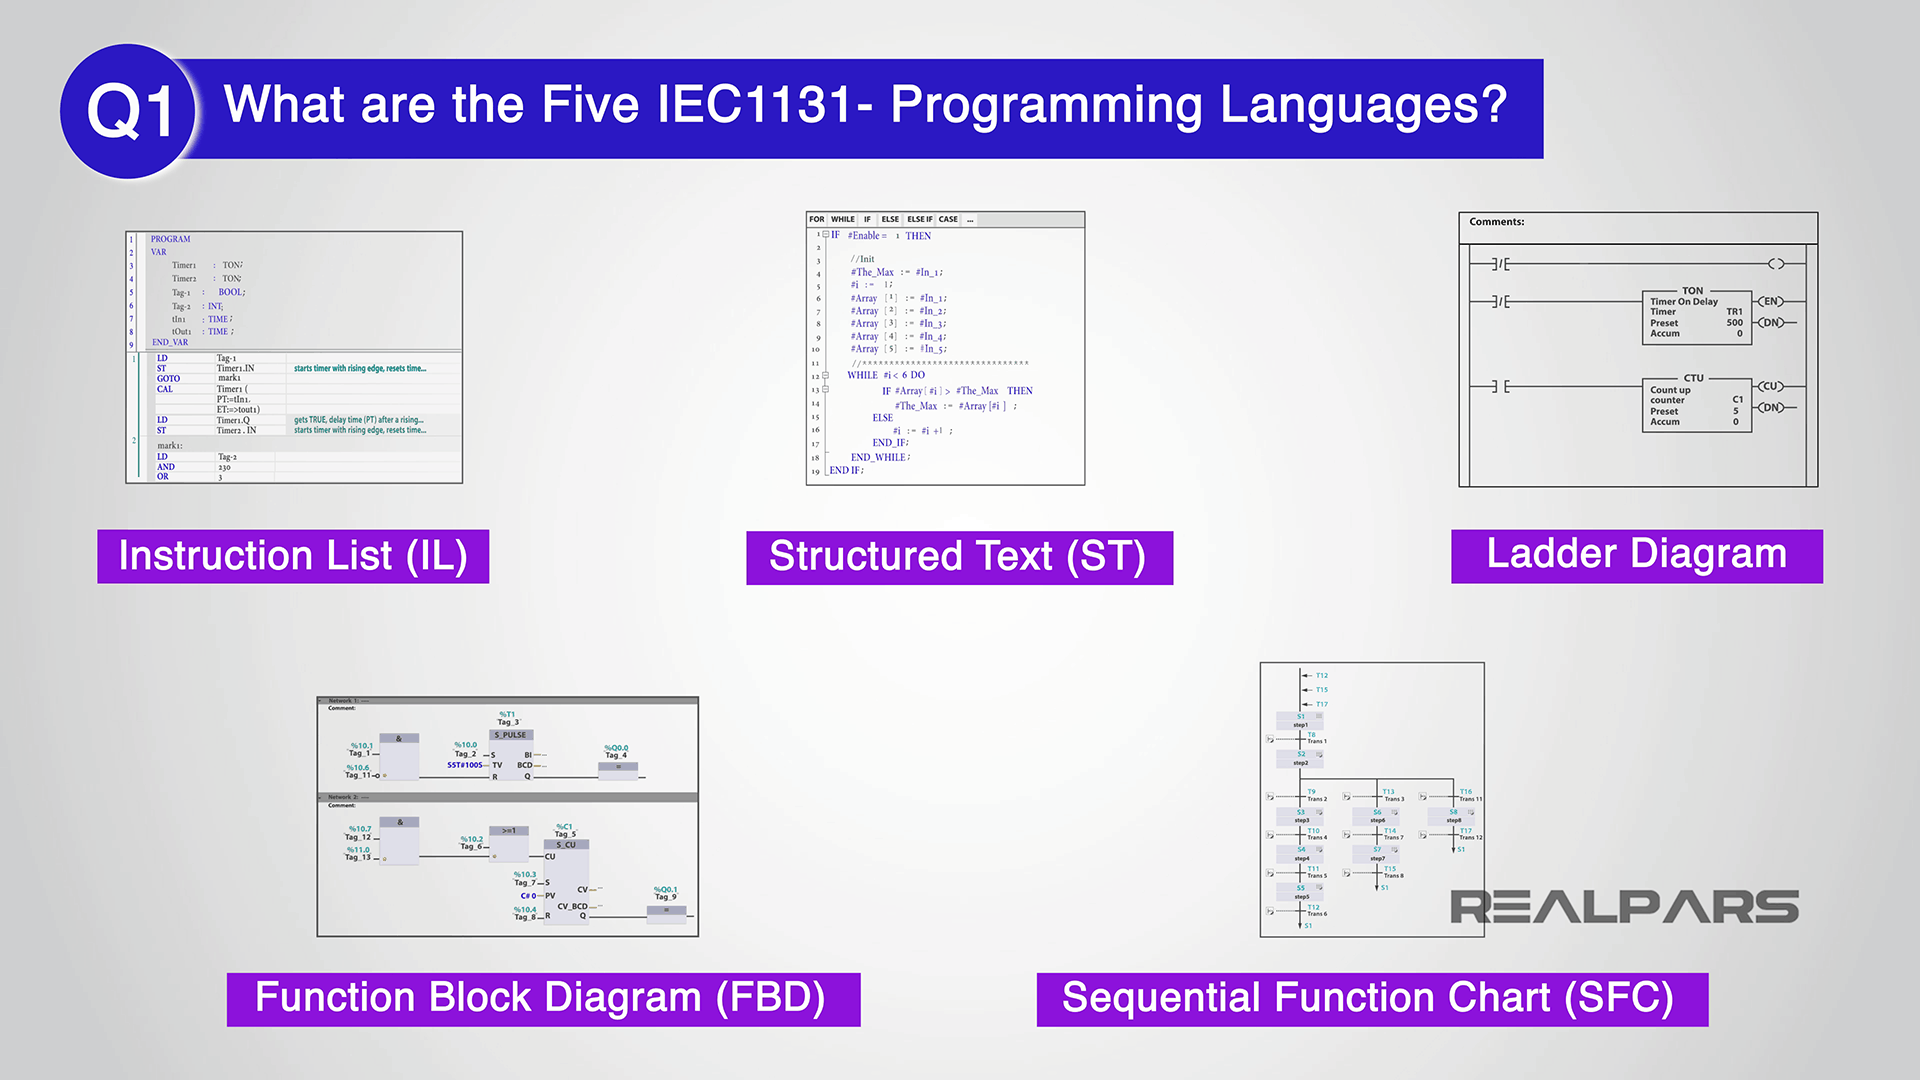 Five IEC1131 Programming Languages